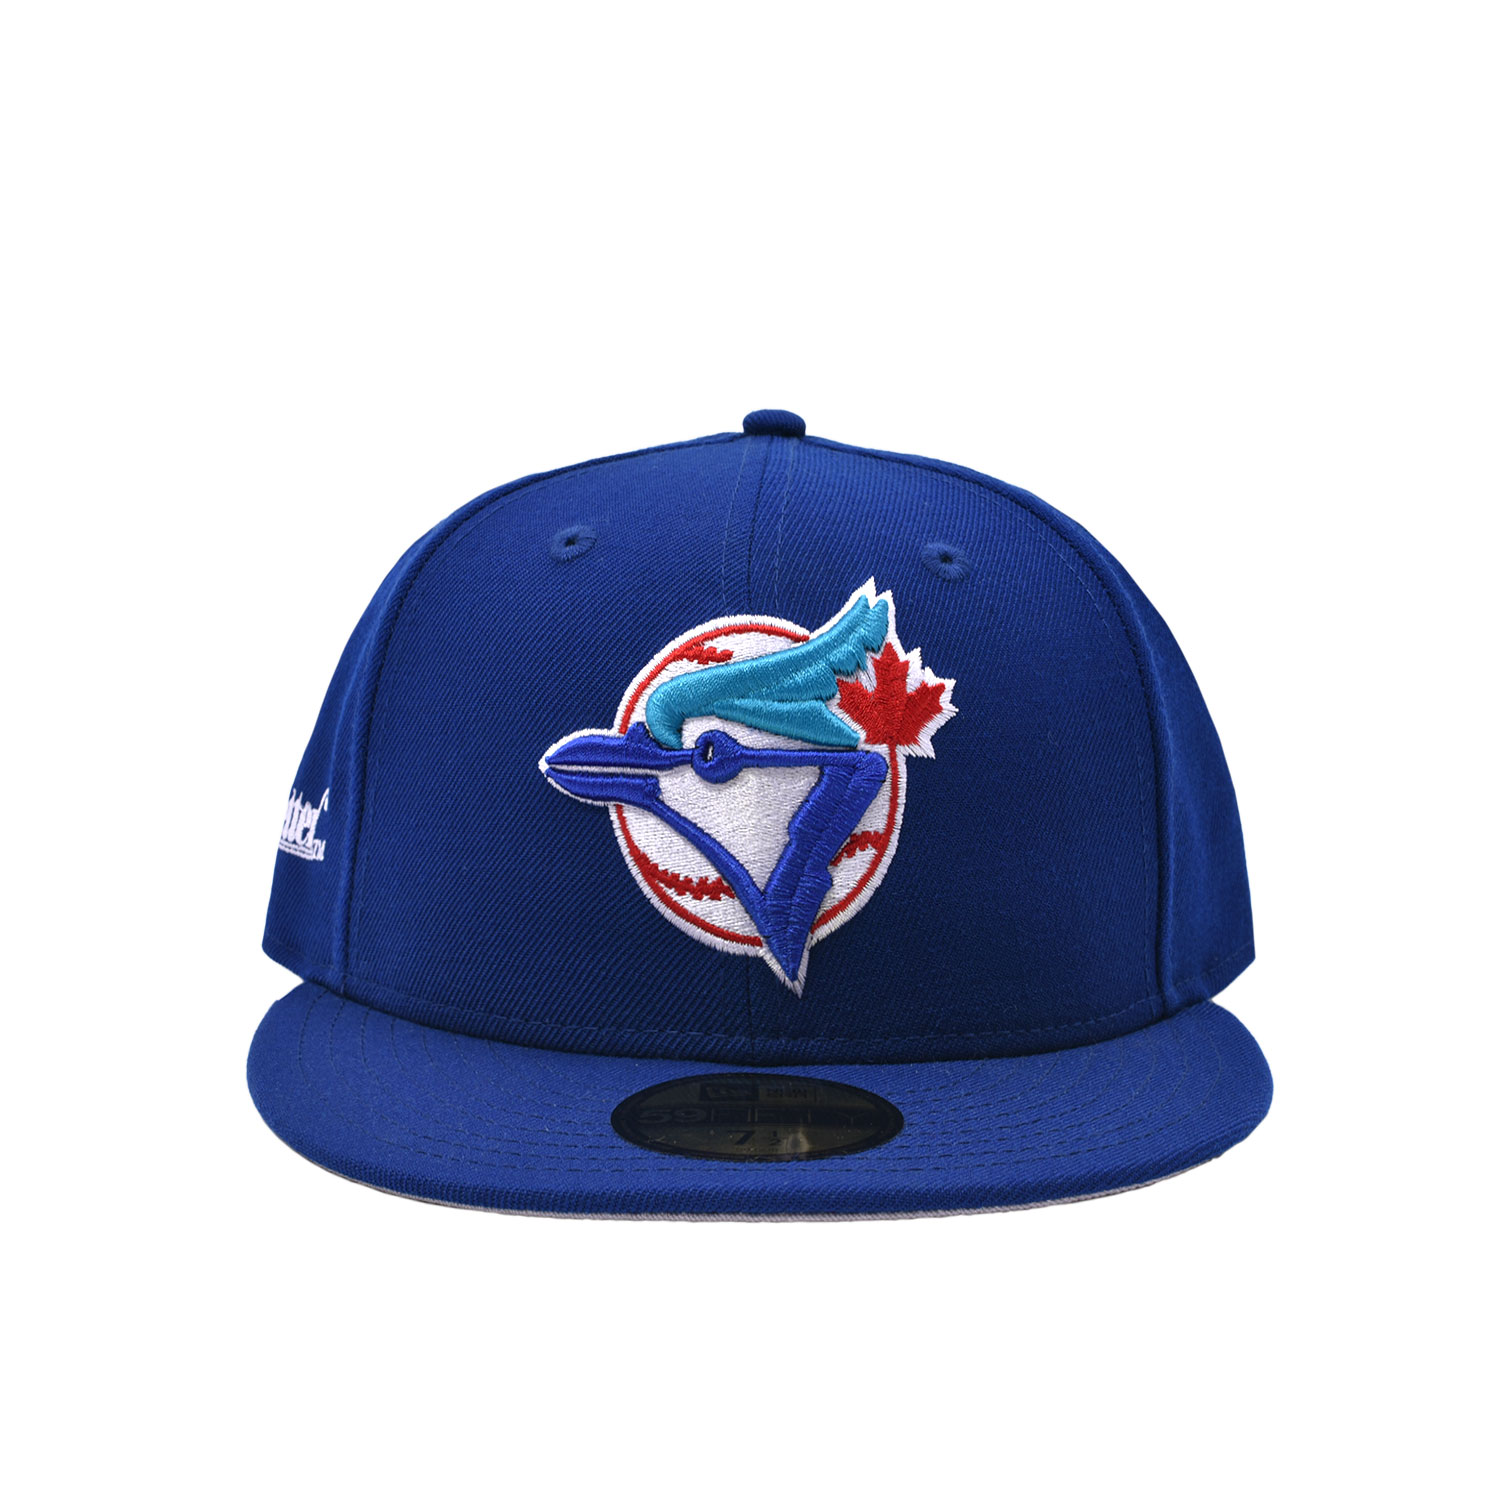 Better New Era Toronto Blue Jays Cap